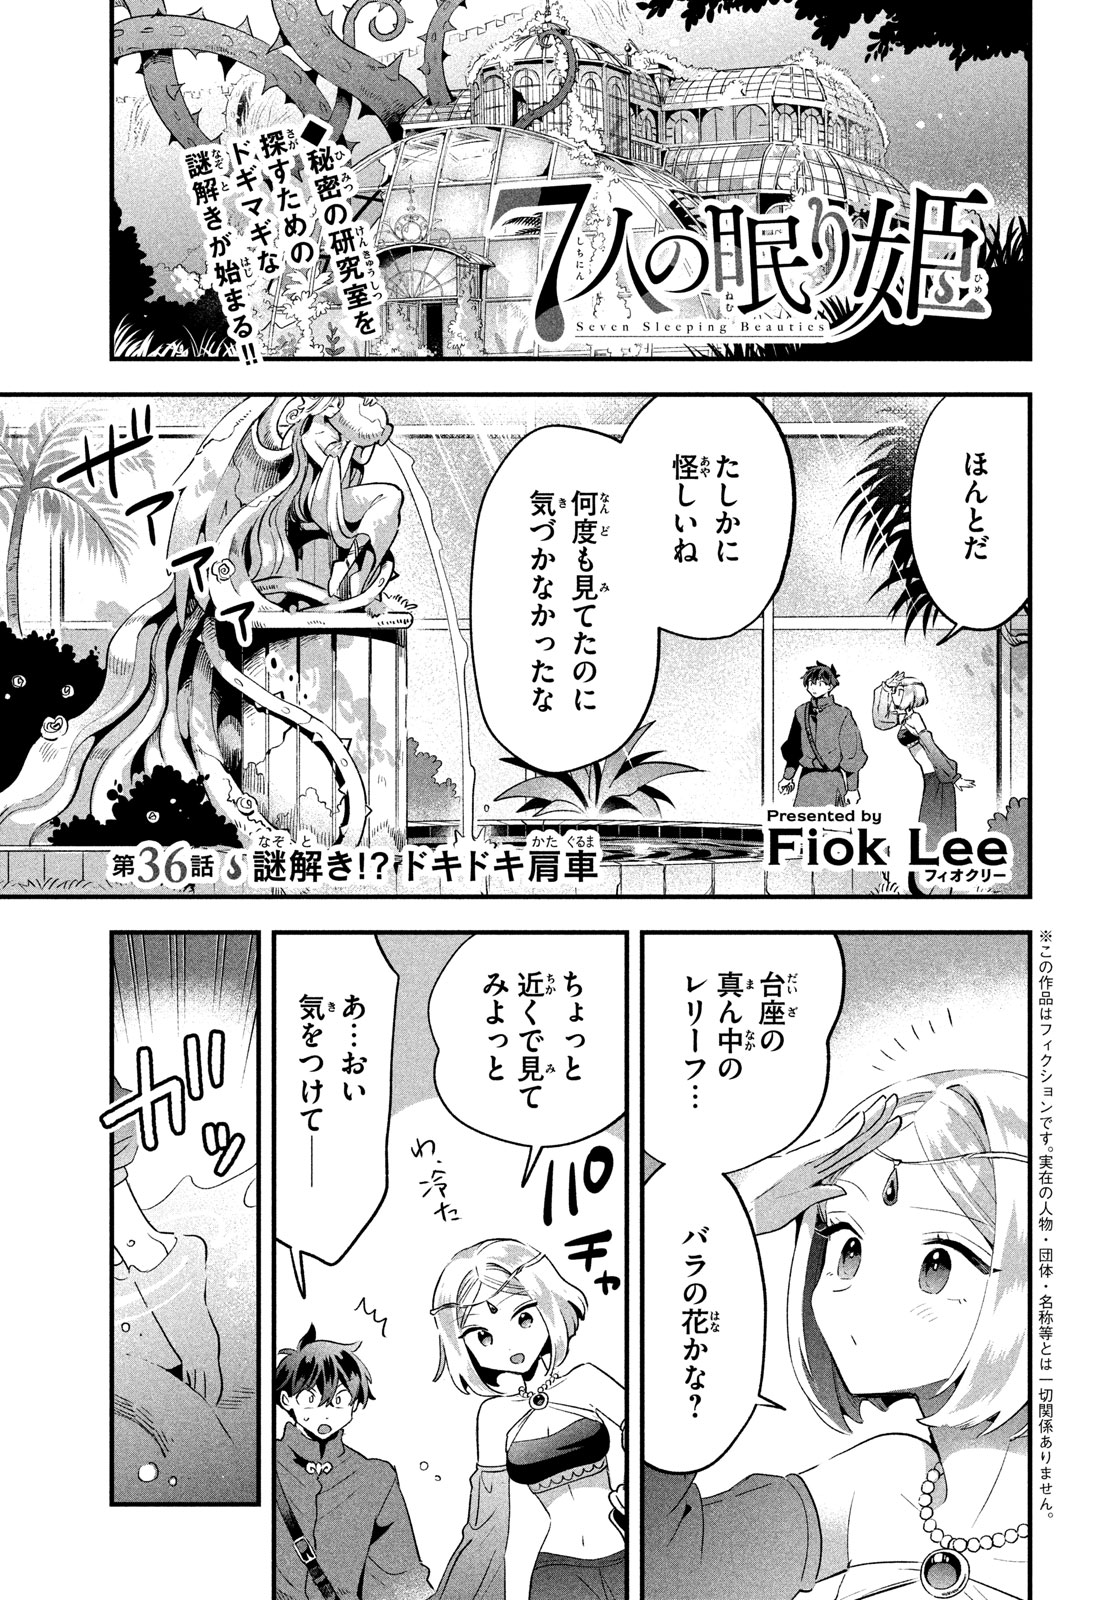 7-nin no Nemuri Hime - Chapter 36 - Page 1